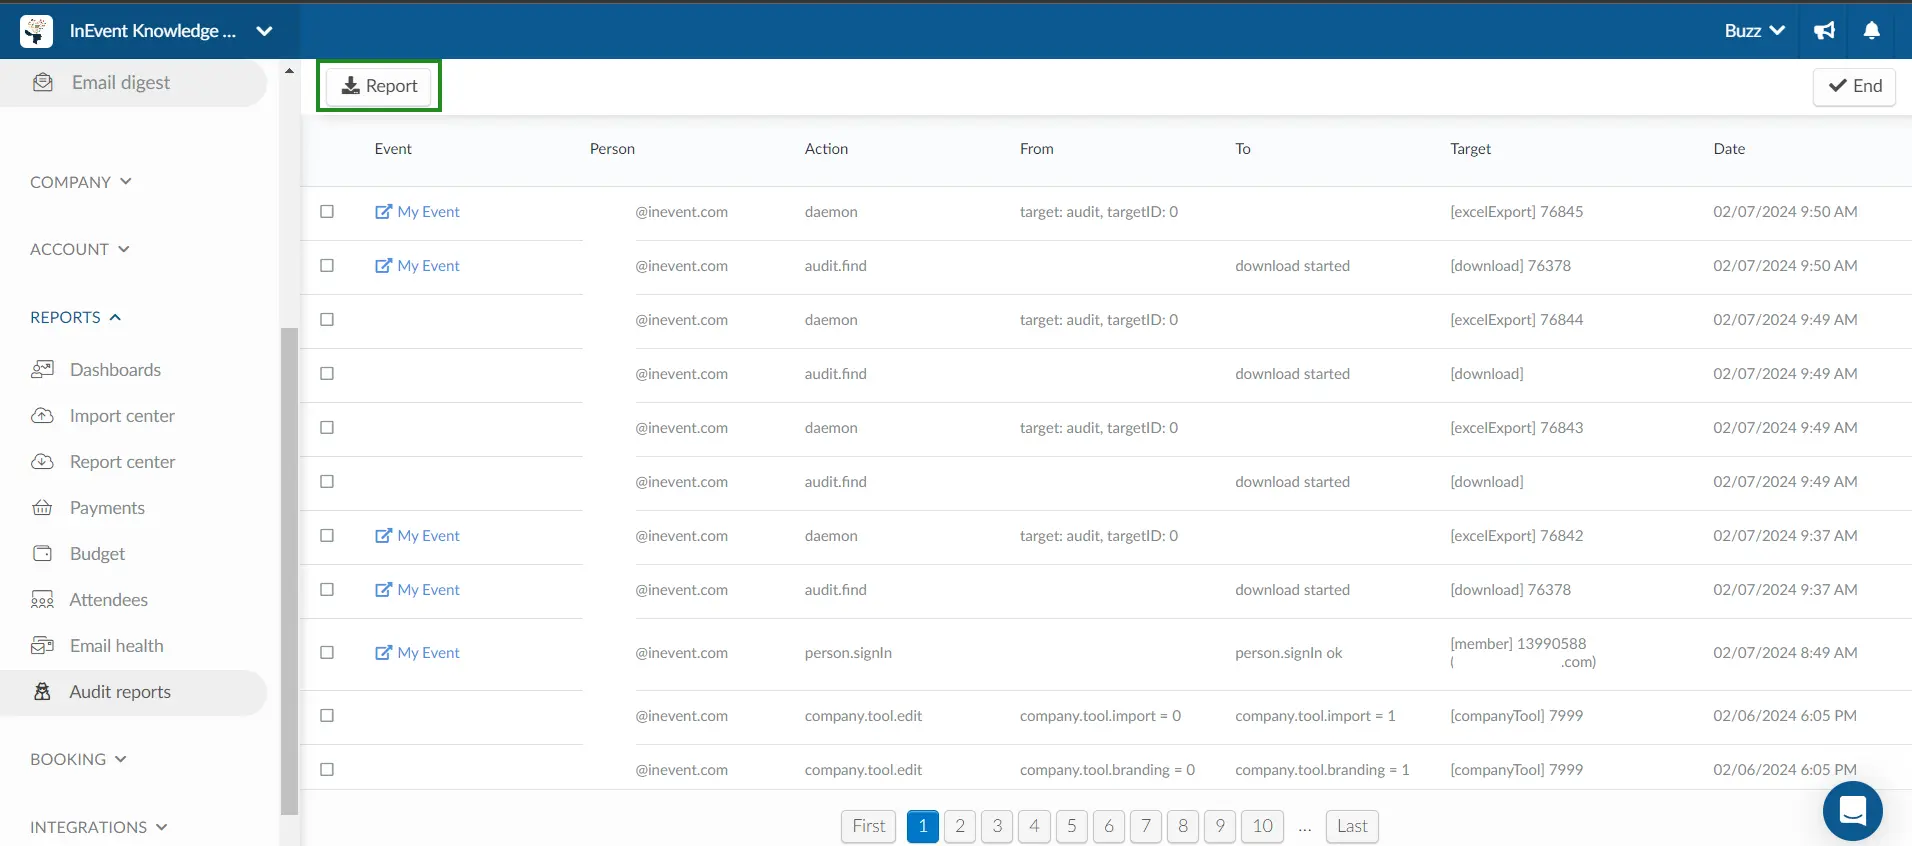 Screenshot showing a spreadsheet import interface